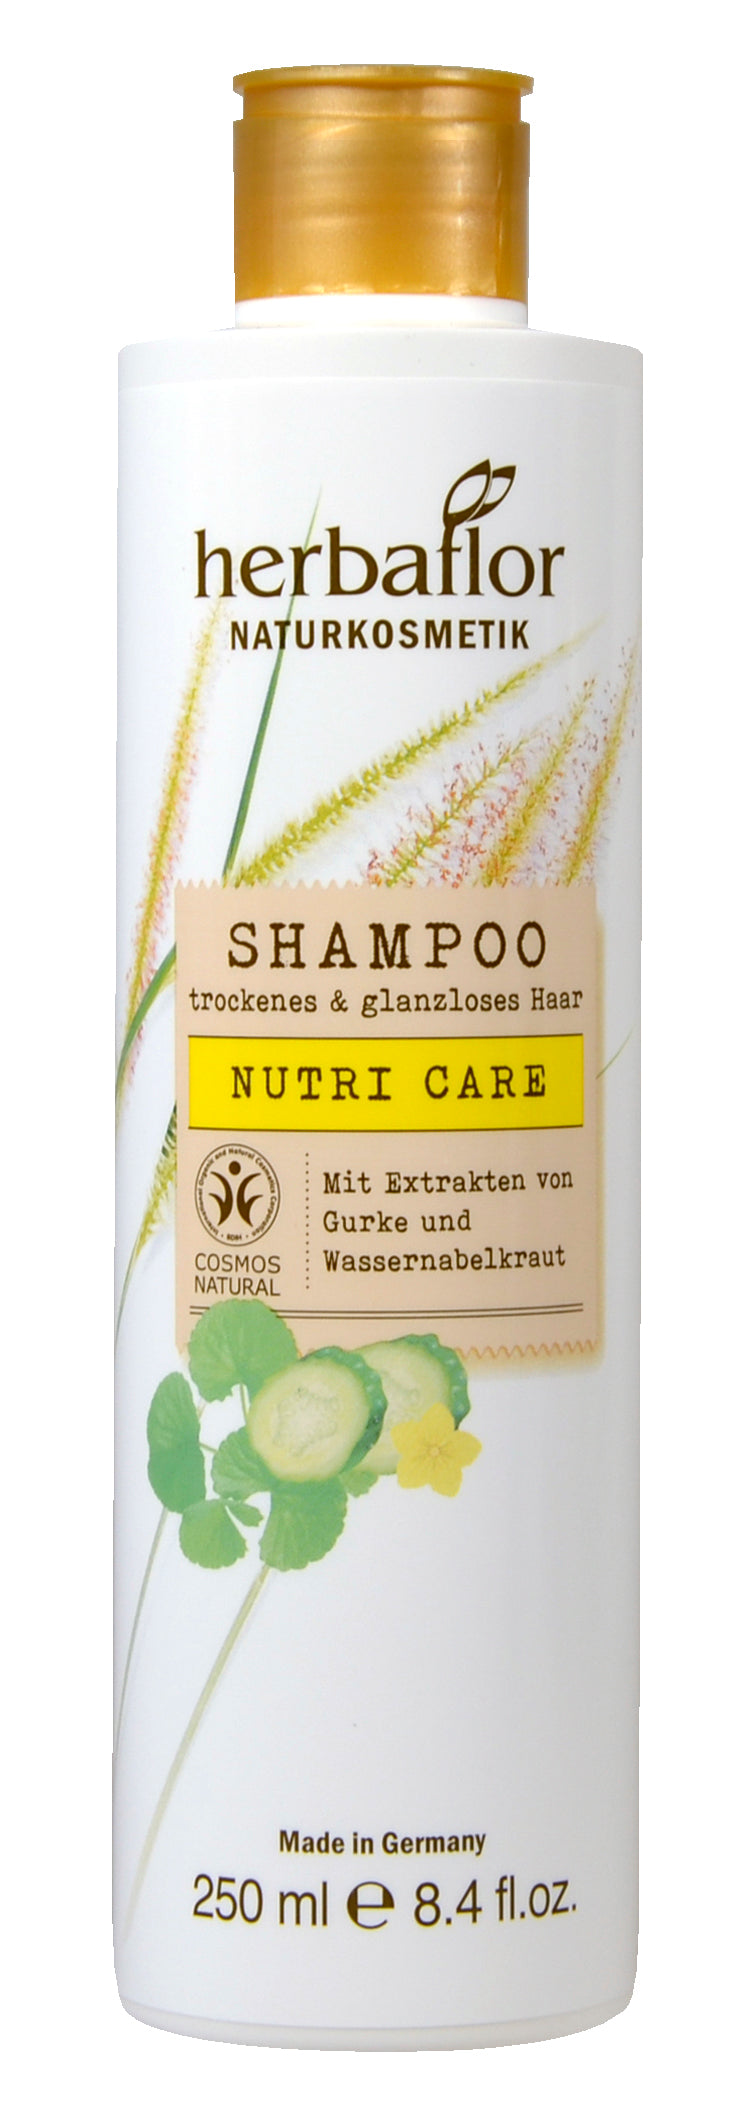 Nutri Care Shampoo Naturkosmetik 250 ml